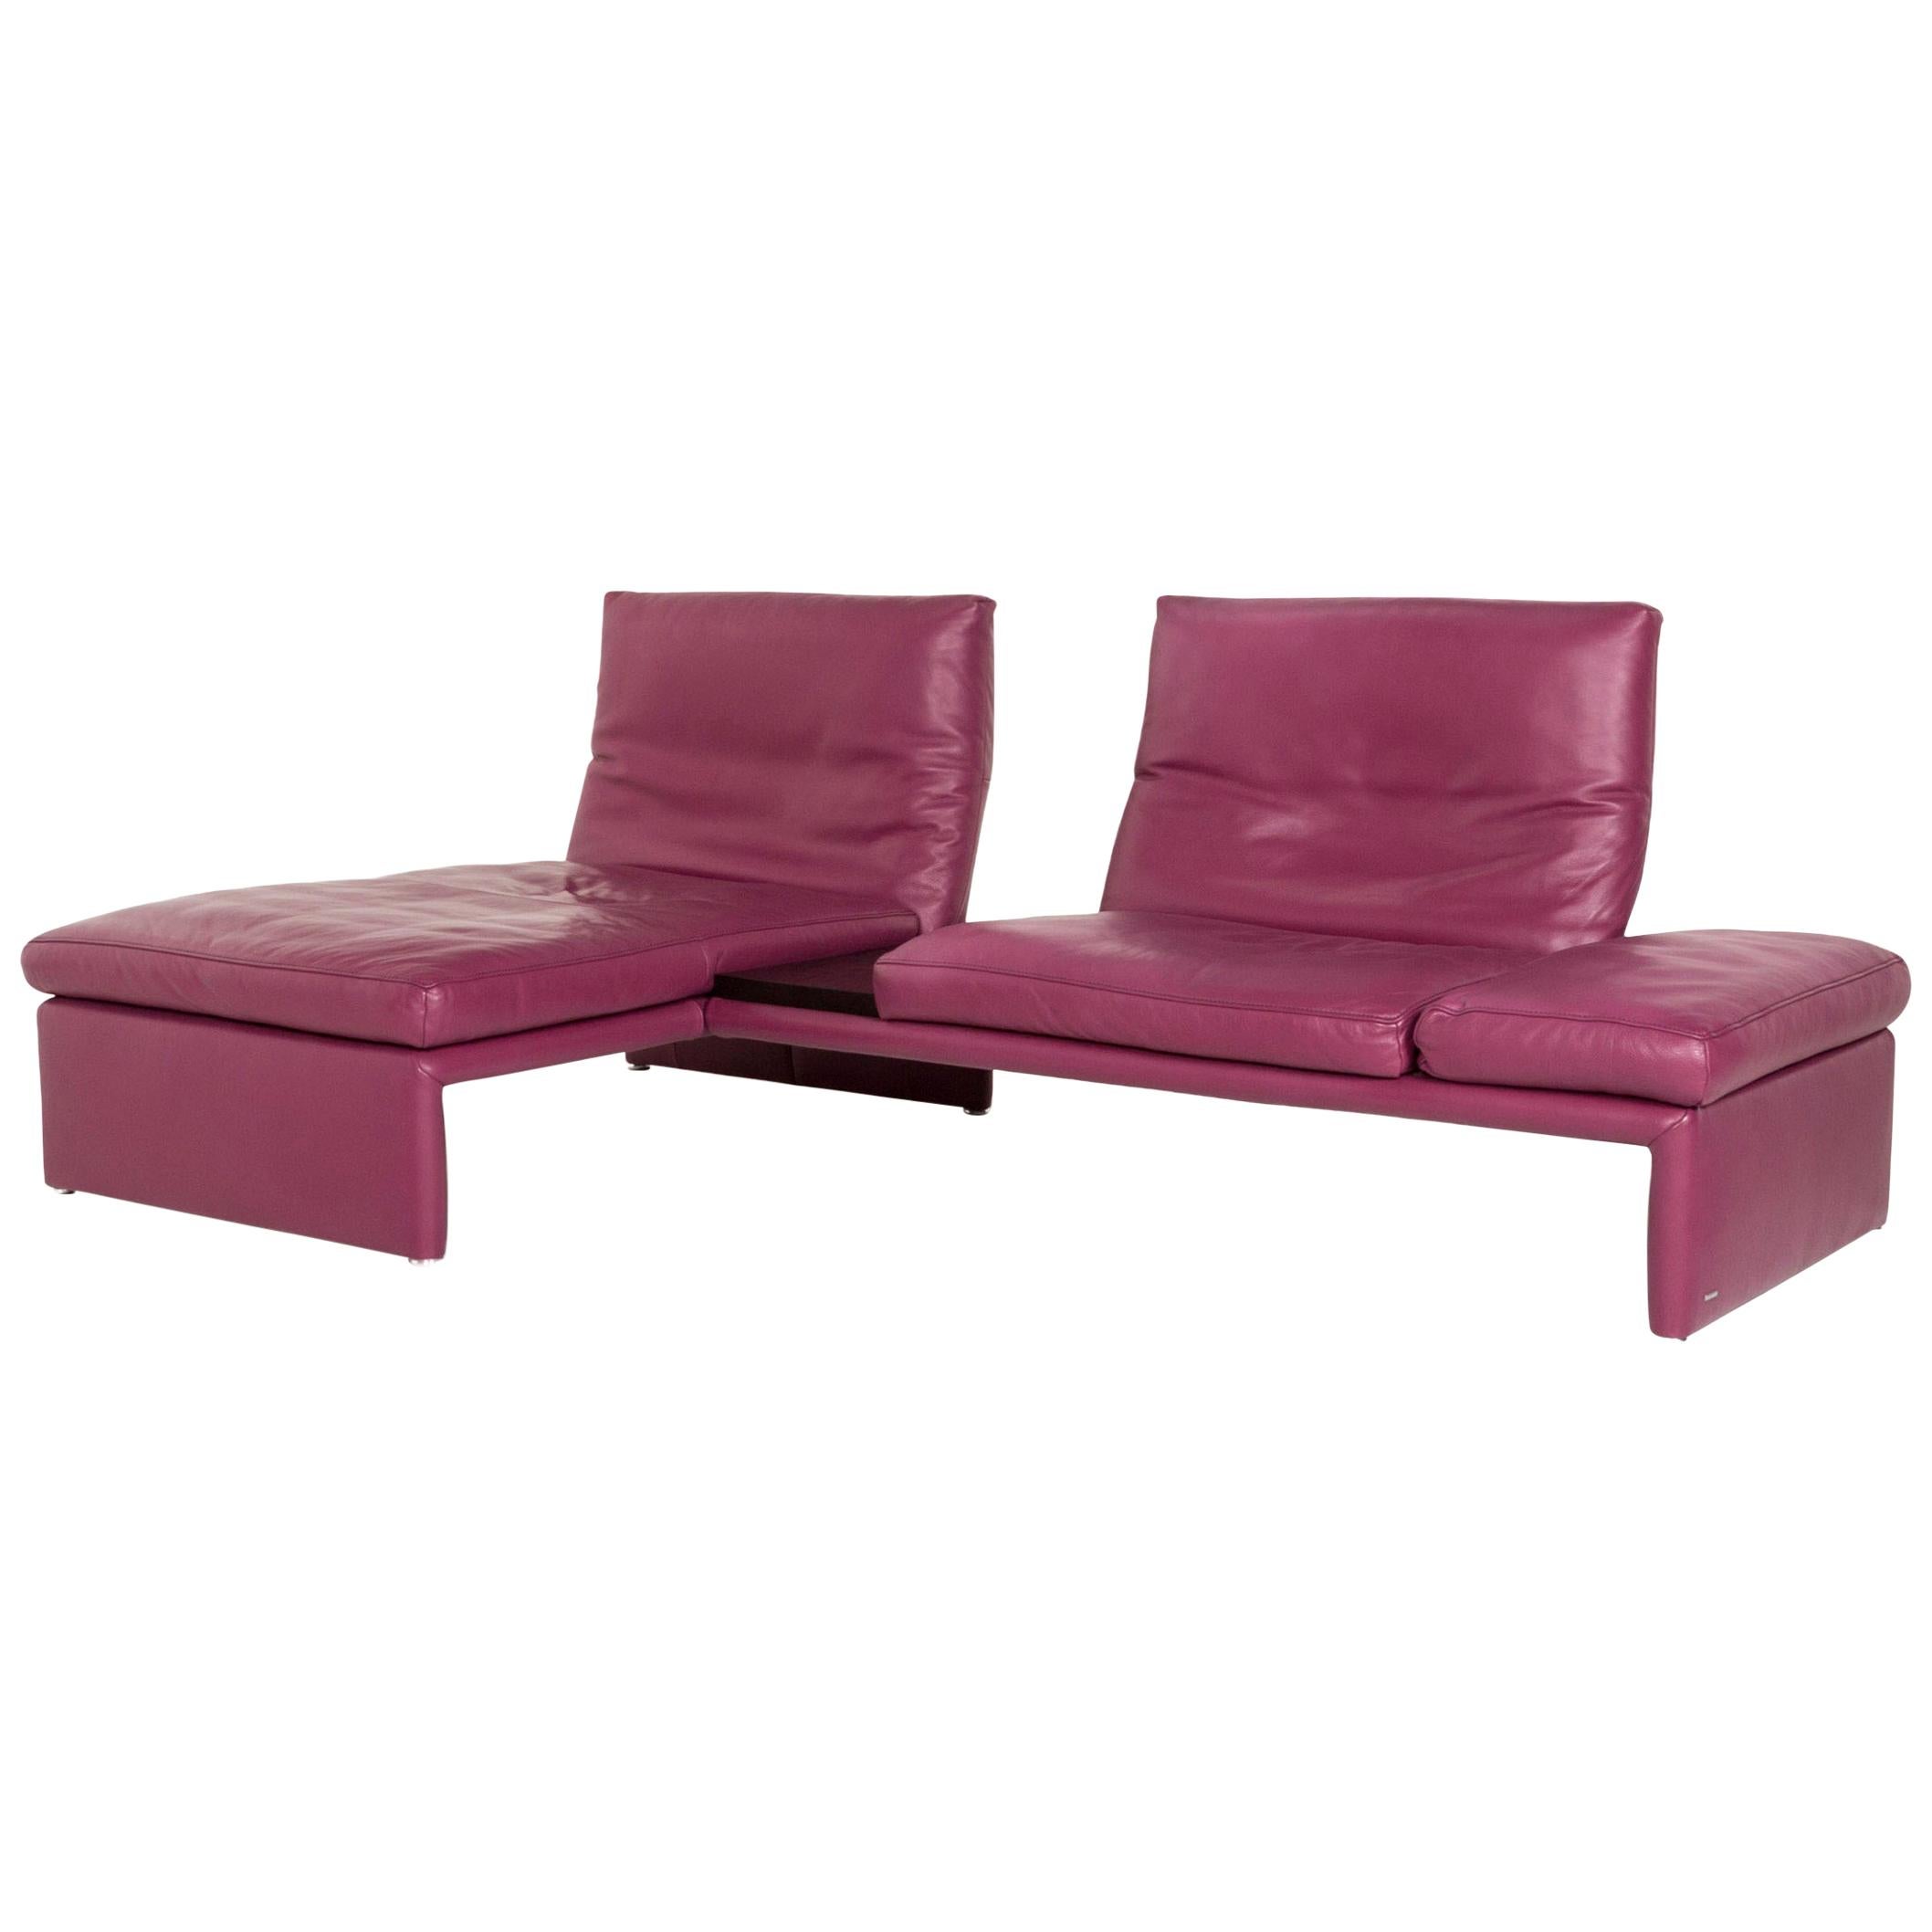 Koinor Raoul Leather Corner Sofa Purple Sofa Function Couch